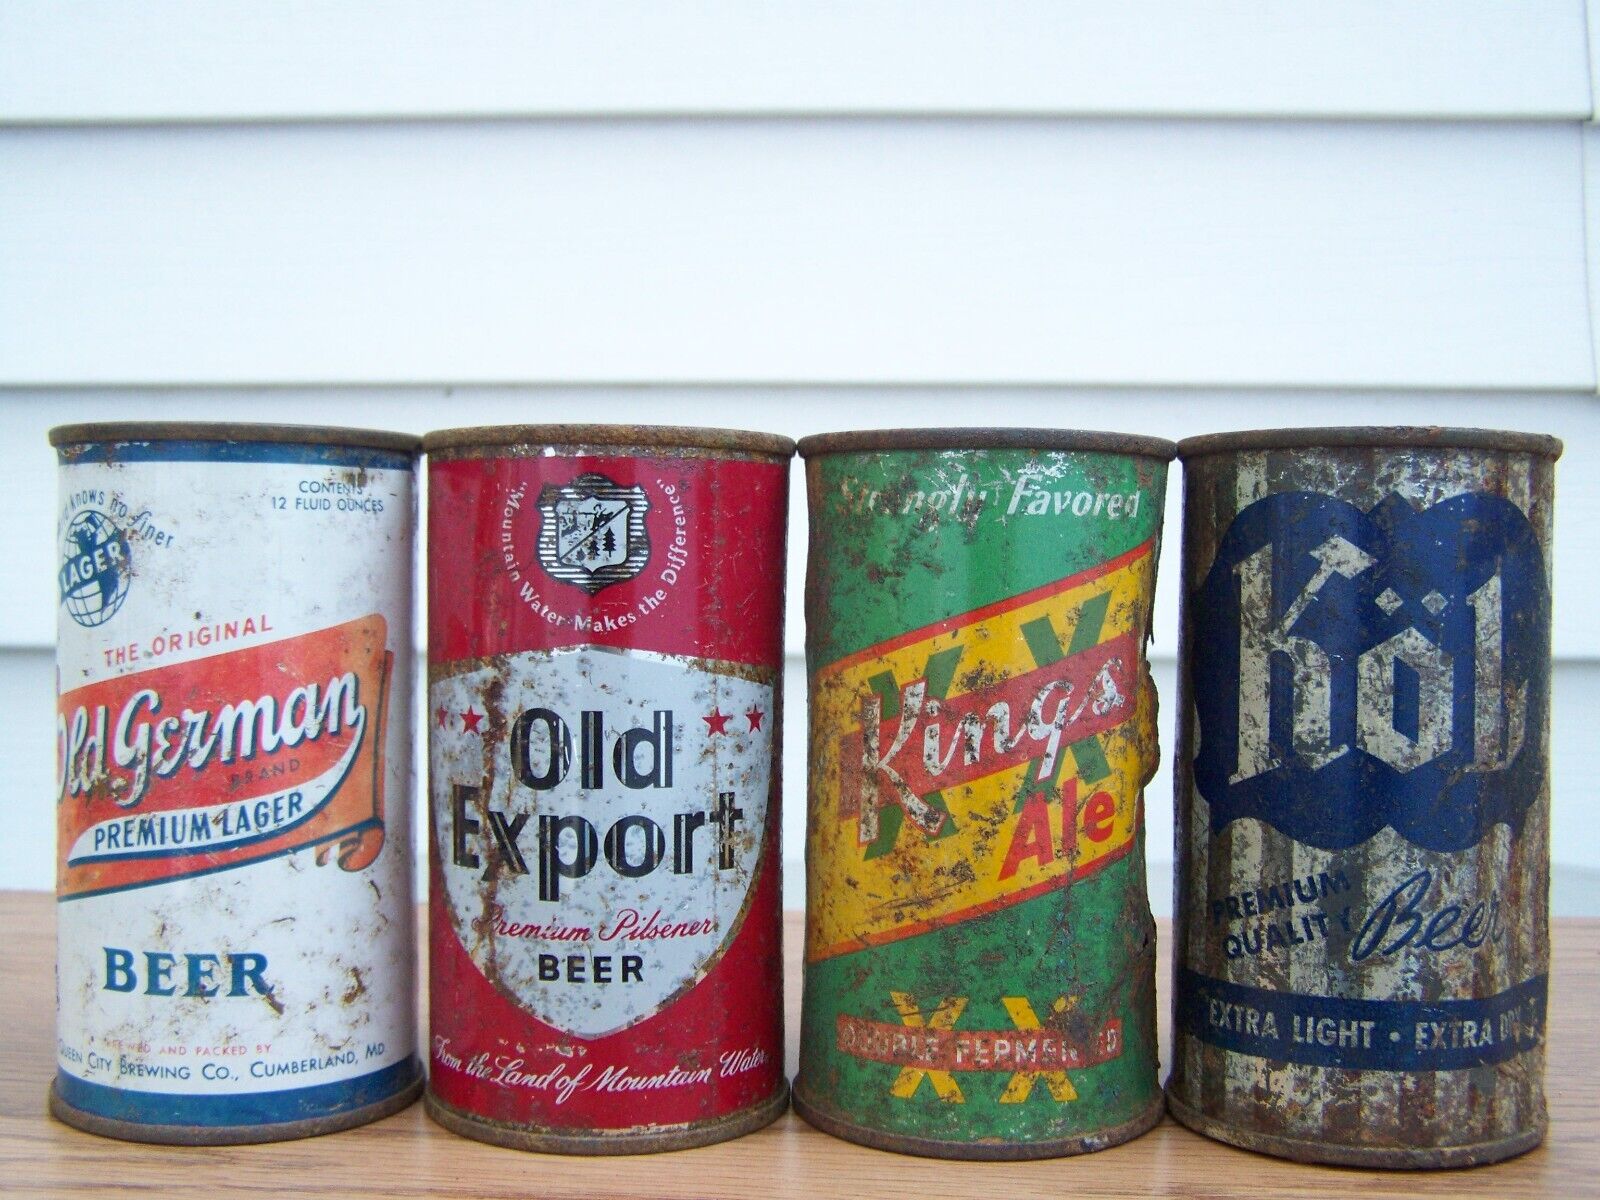 Old German, Old Export, Kings, Kol Flat Top Beer Cans - Cumberland, Maryland